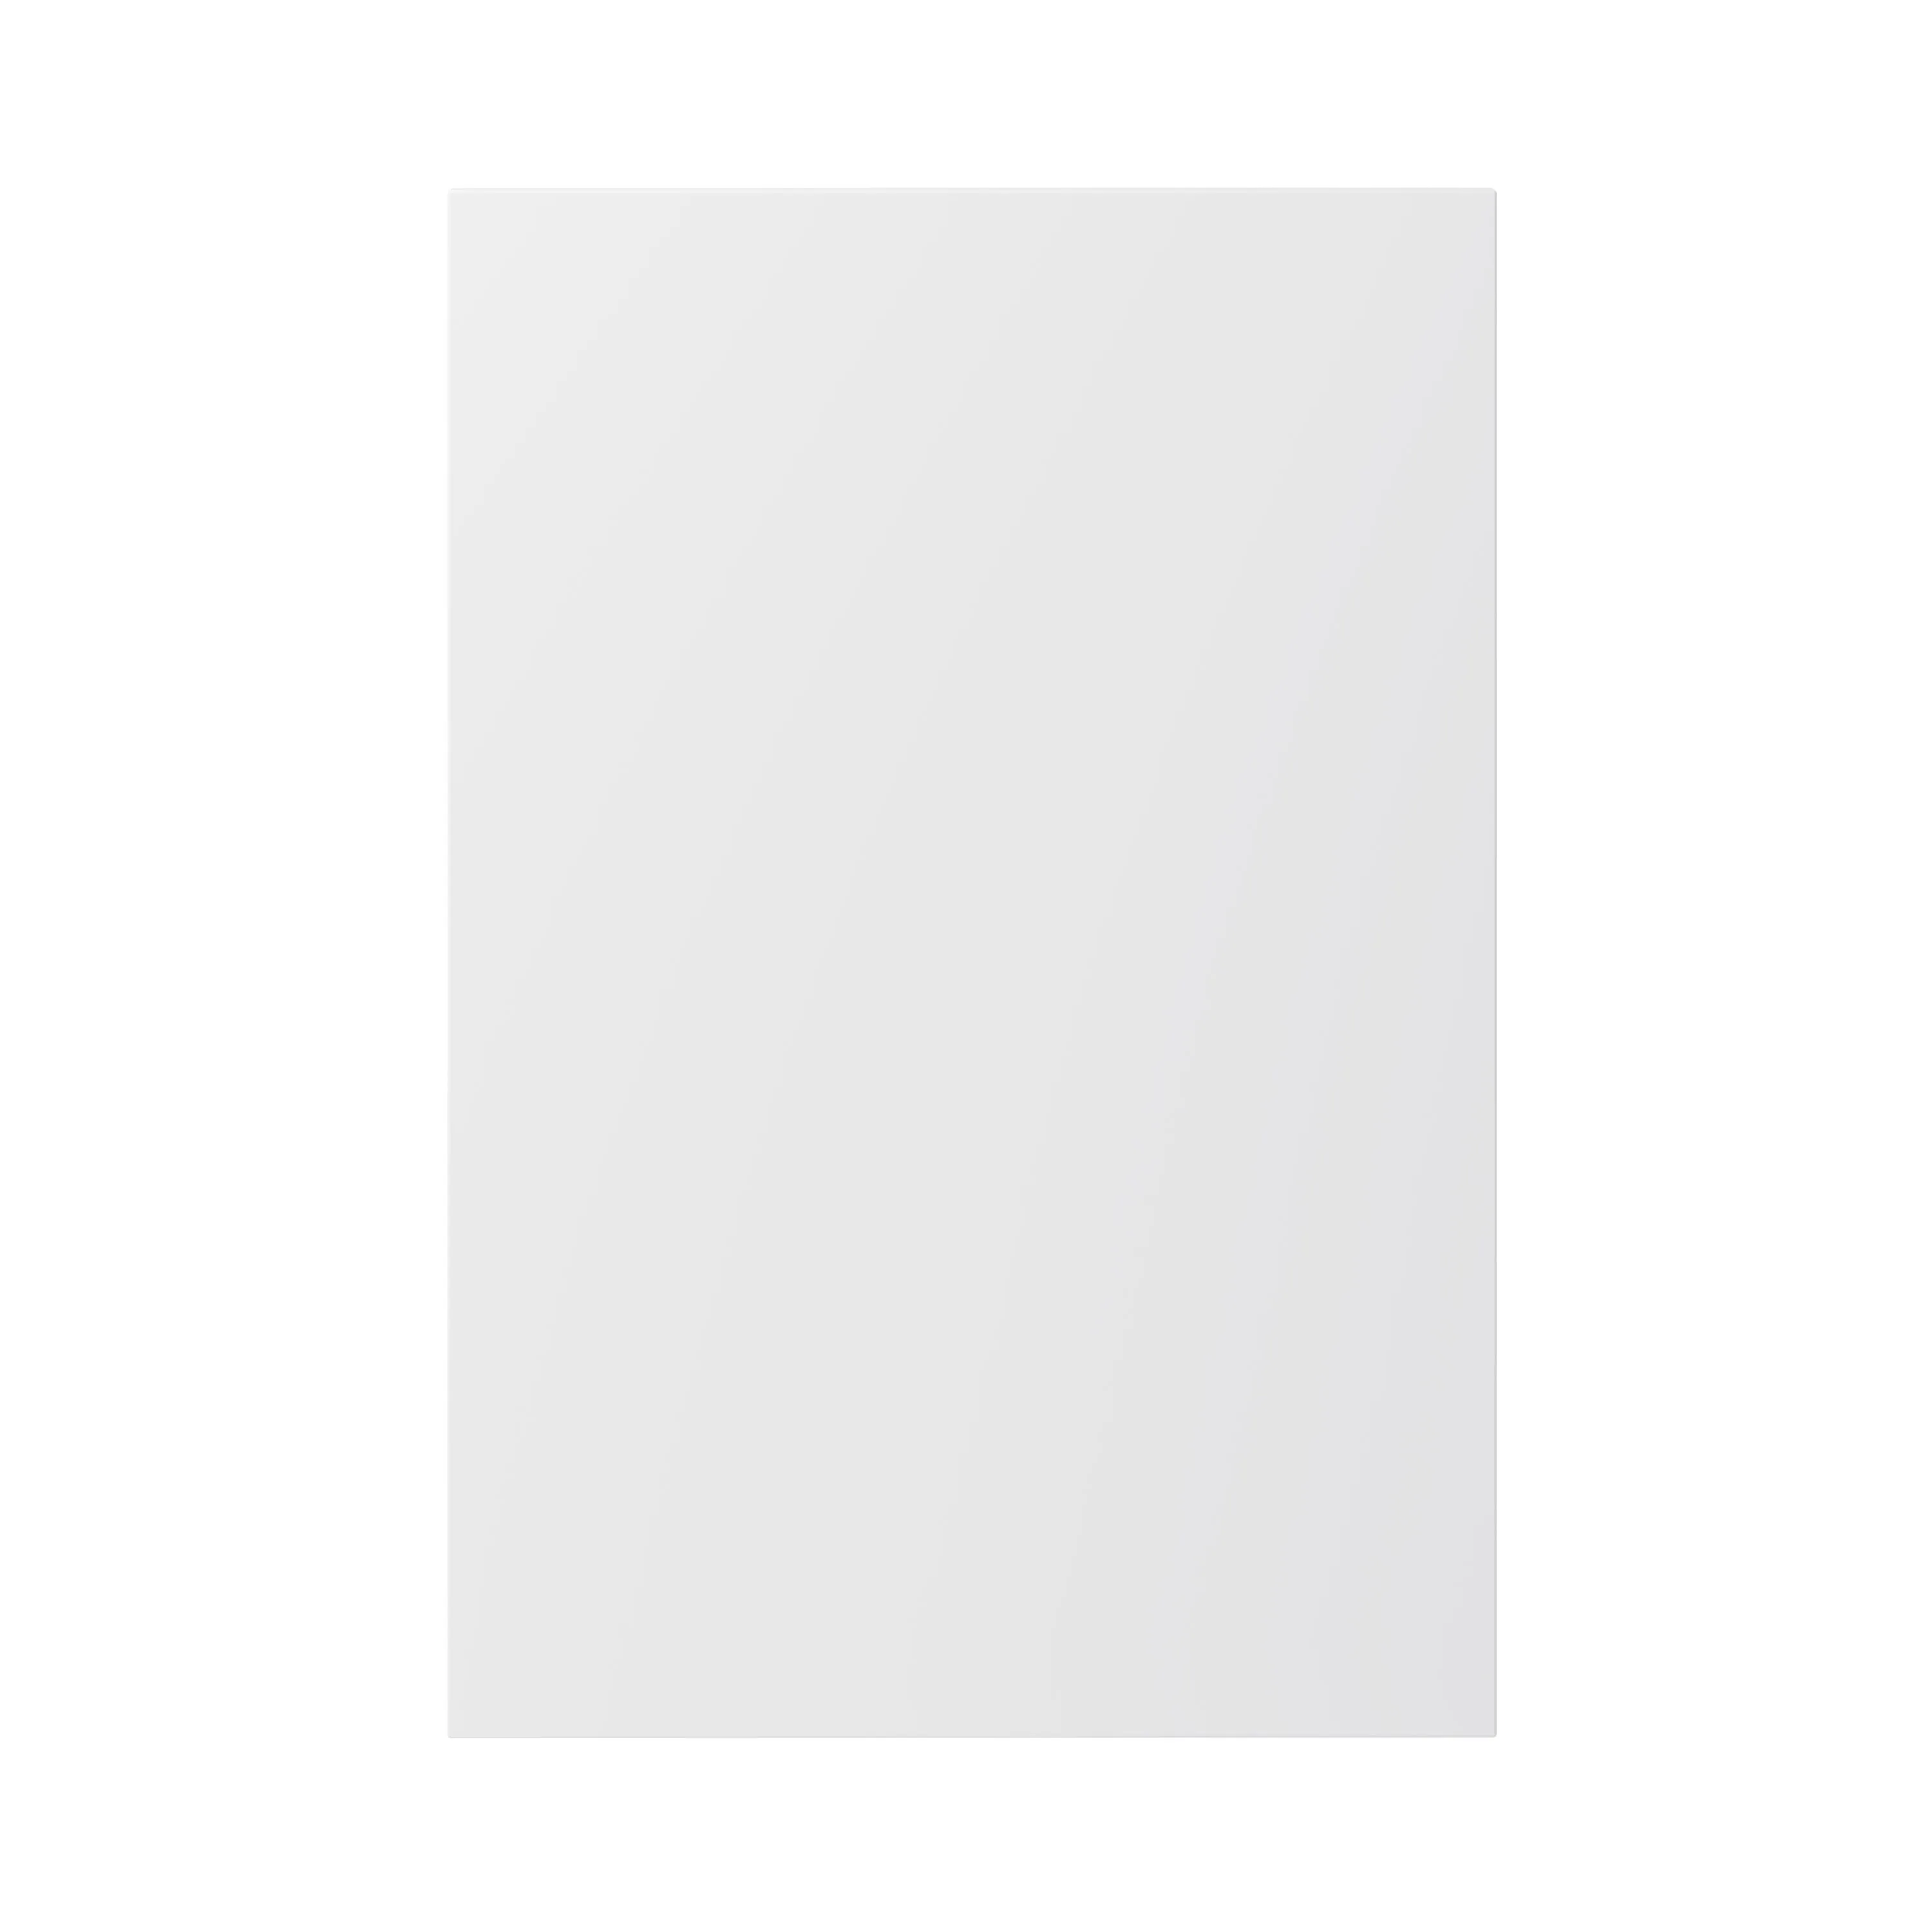 GoodHome Pasilla Matt white thin frame slab Standard End panel (H)870mm (W)590mm